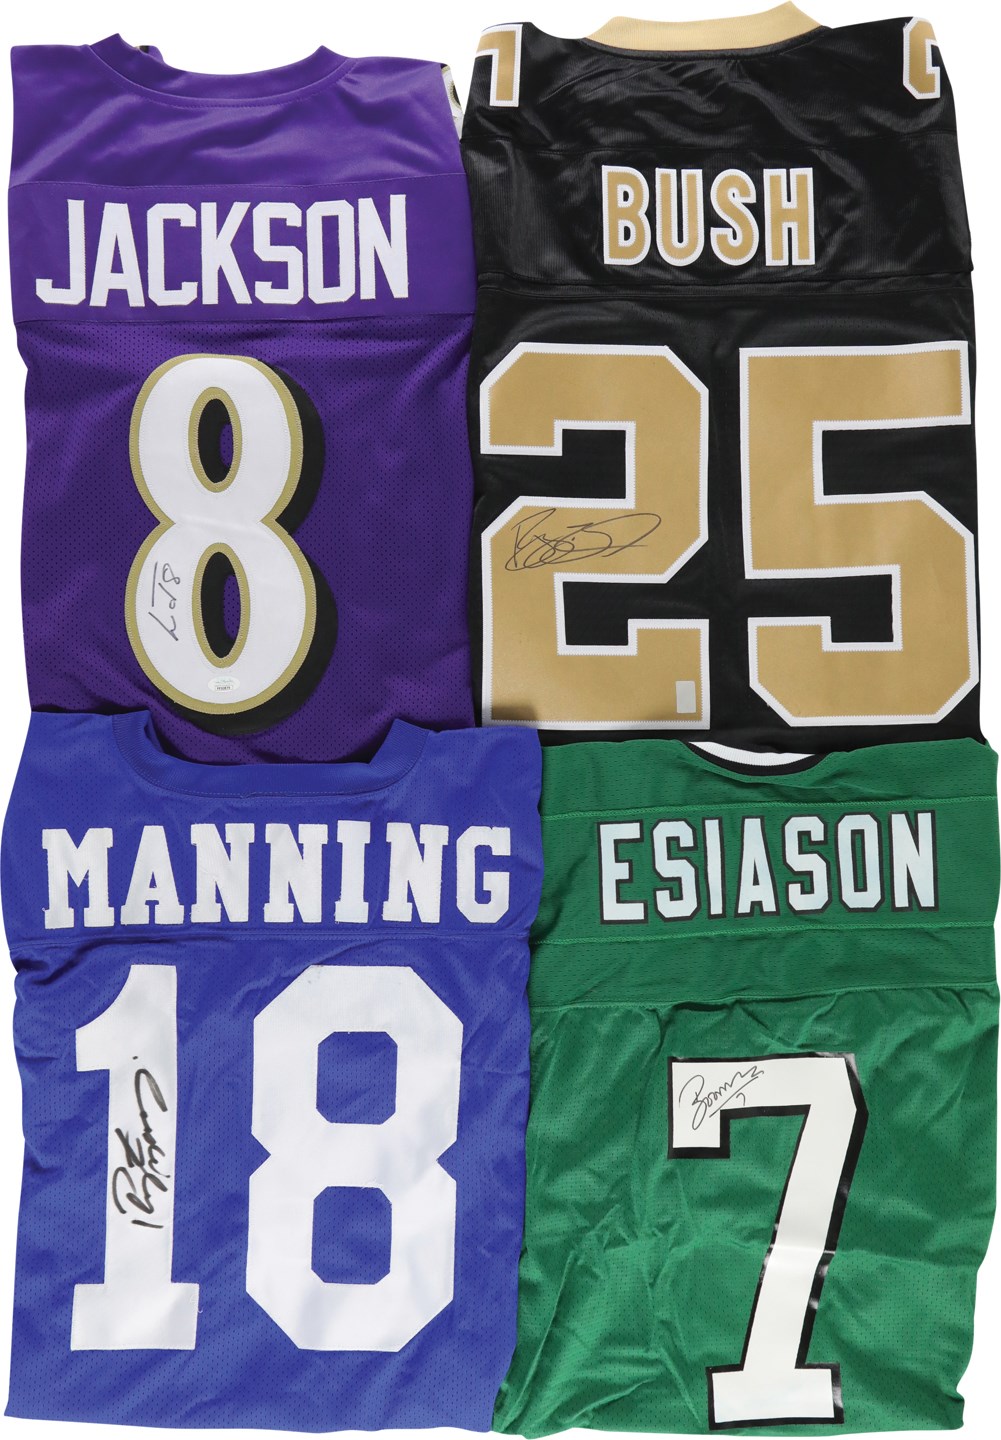 Football - Signed Football Jersey Collection (4): P. Manning, L. Jackson, R. Bush, & B. Esiason